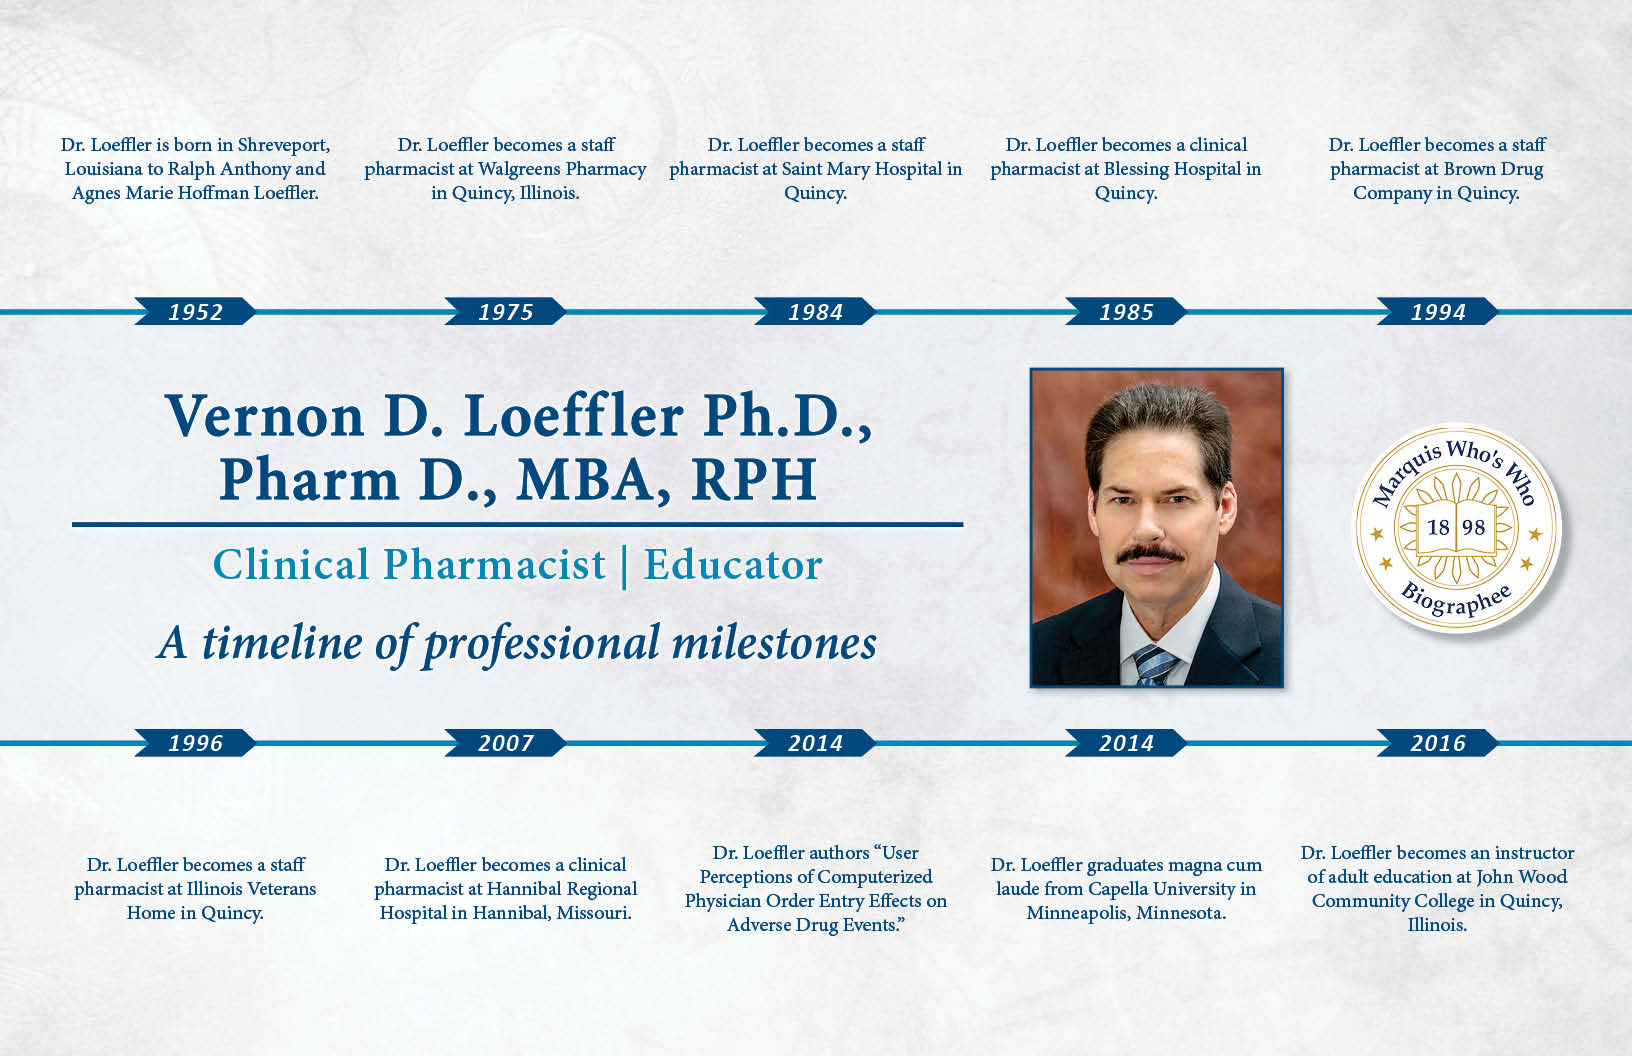 Vernon Loeffler Professional Milestones